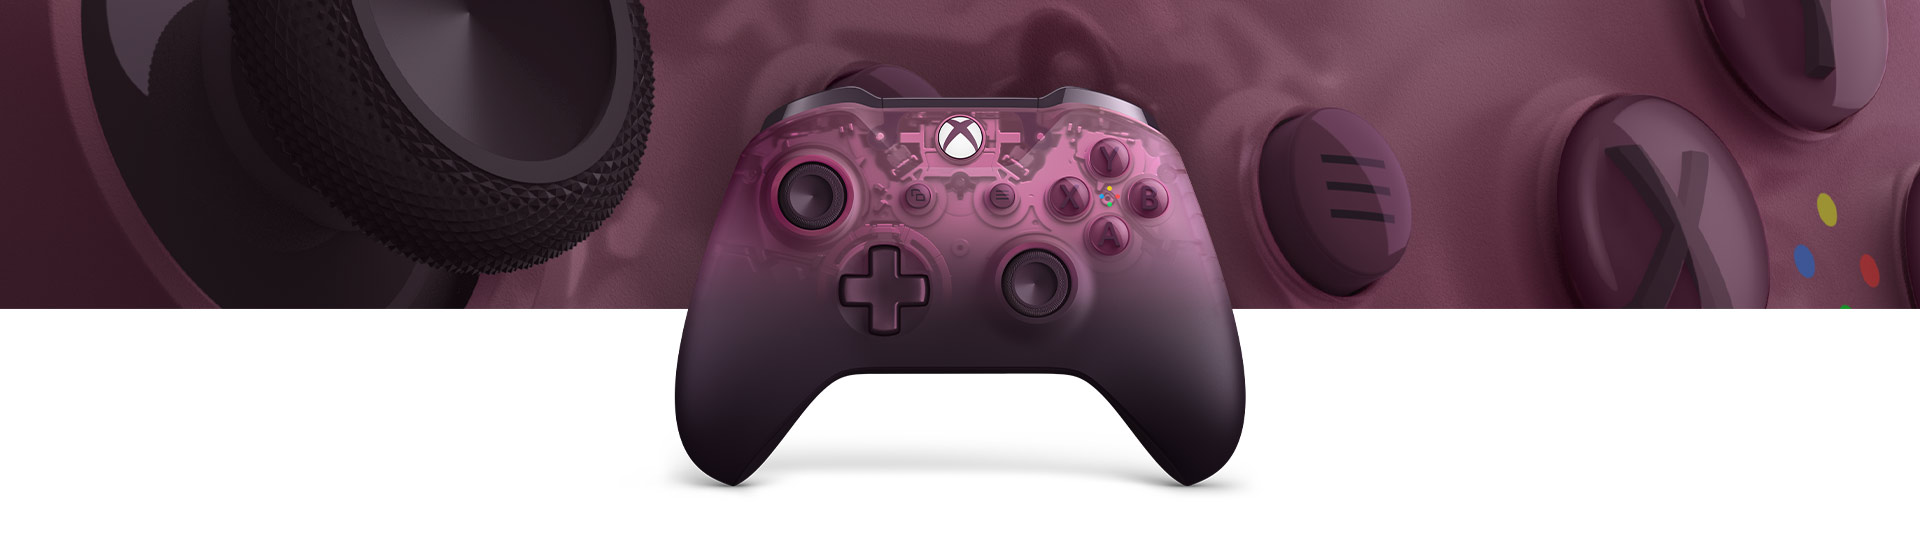 Xbox 無線控制器 – Phantom 洋紅色特別版，以及控制器表面紋路的特寫